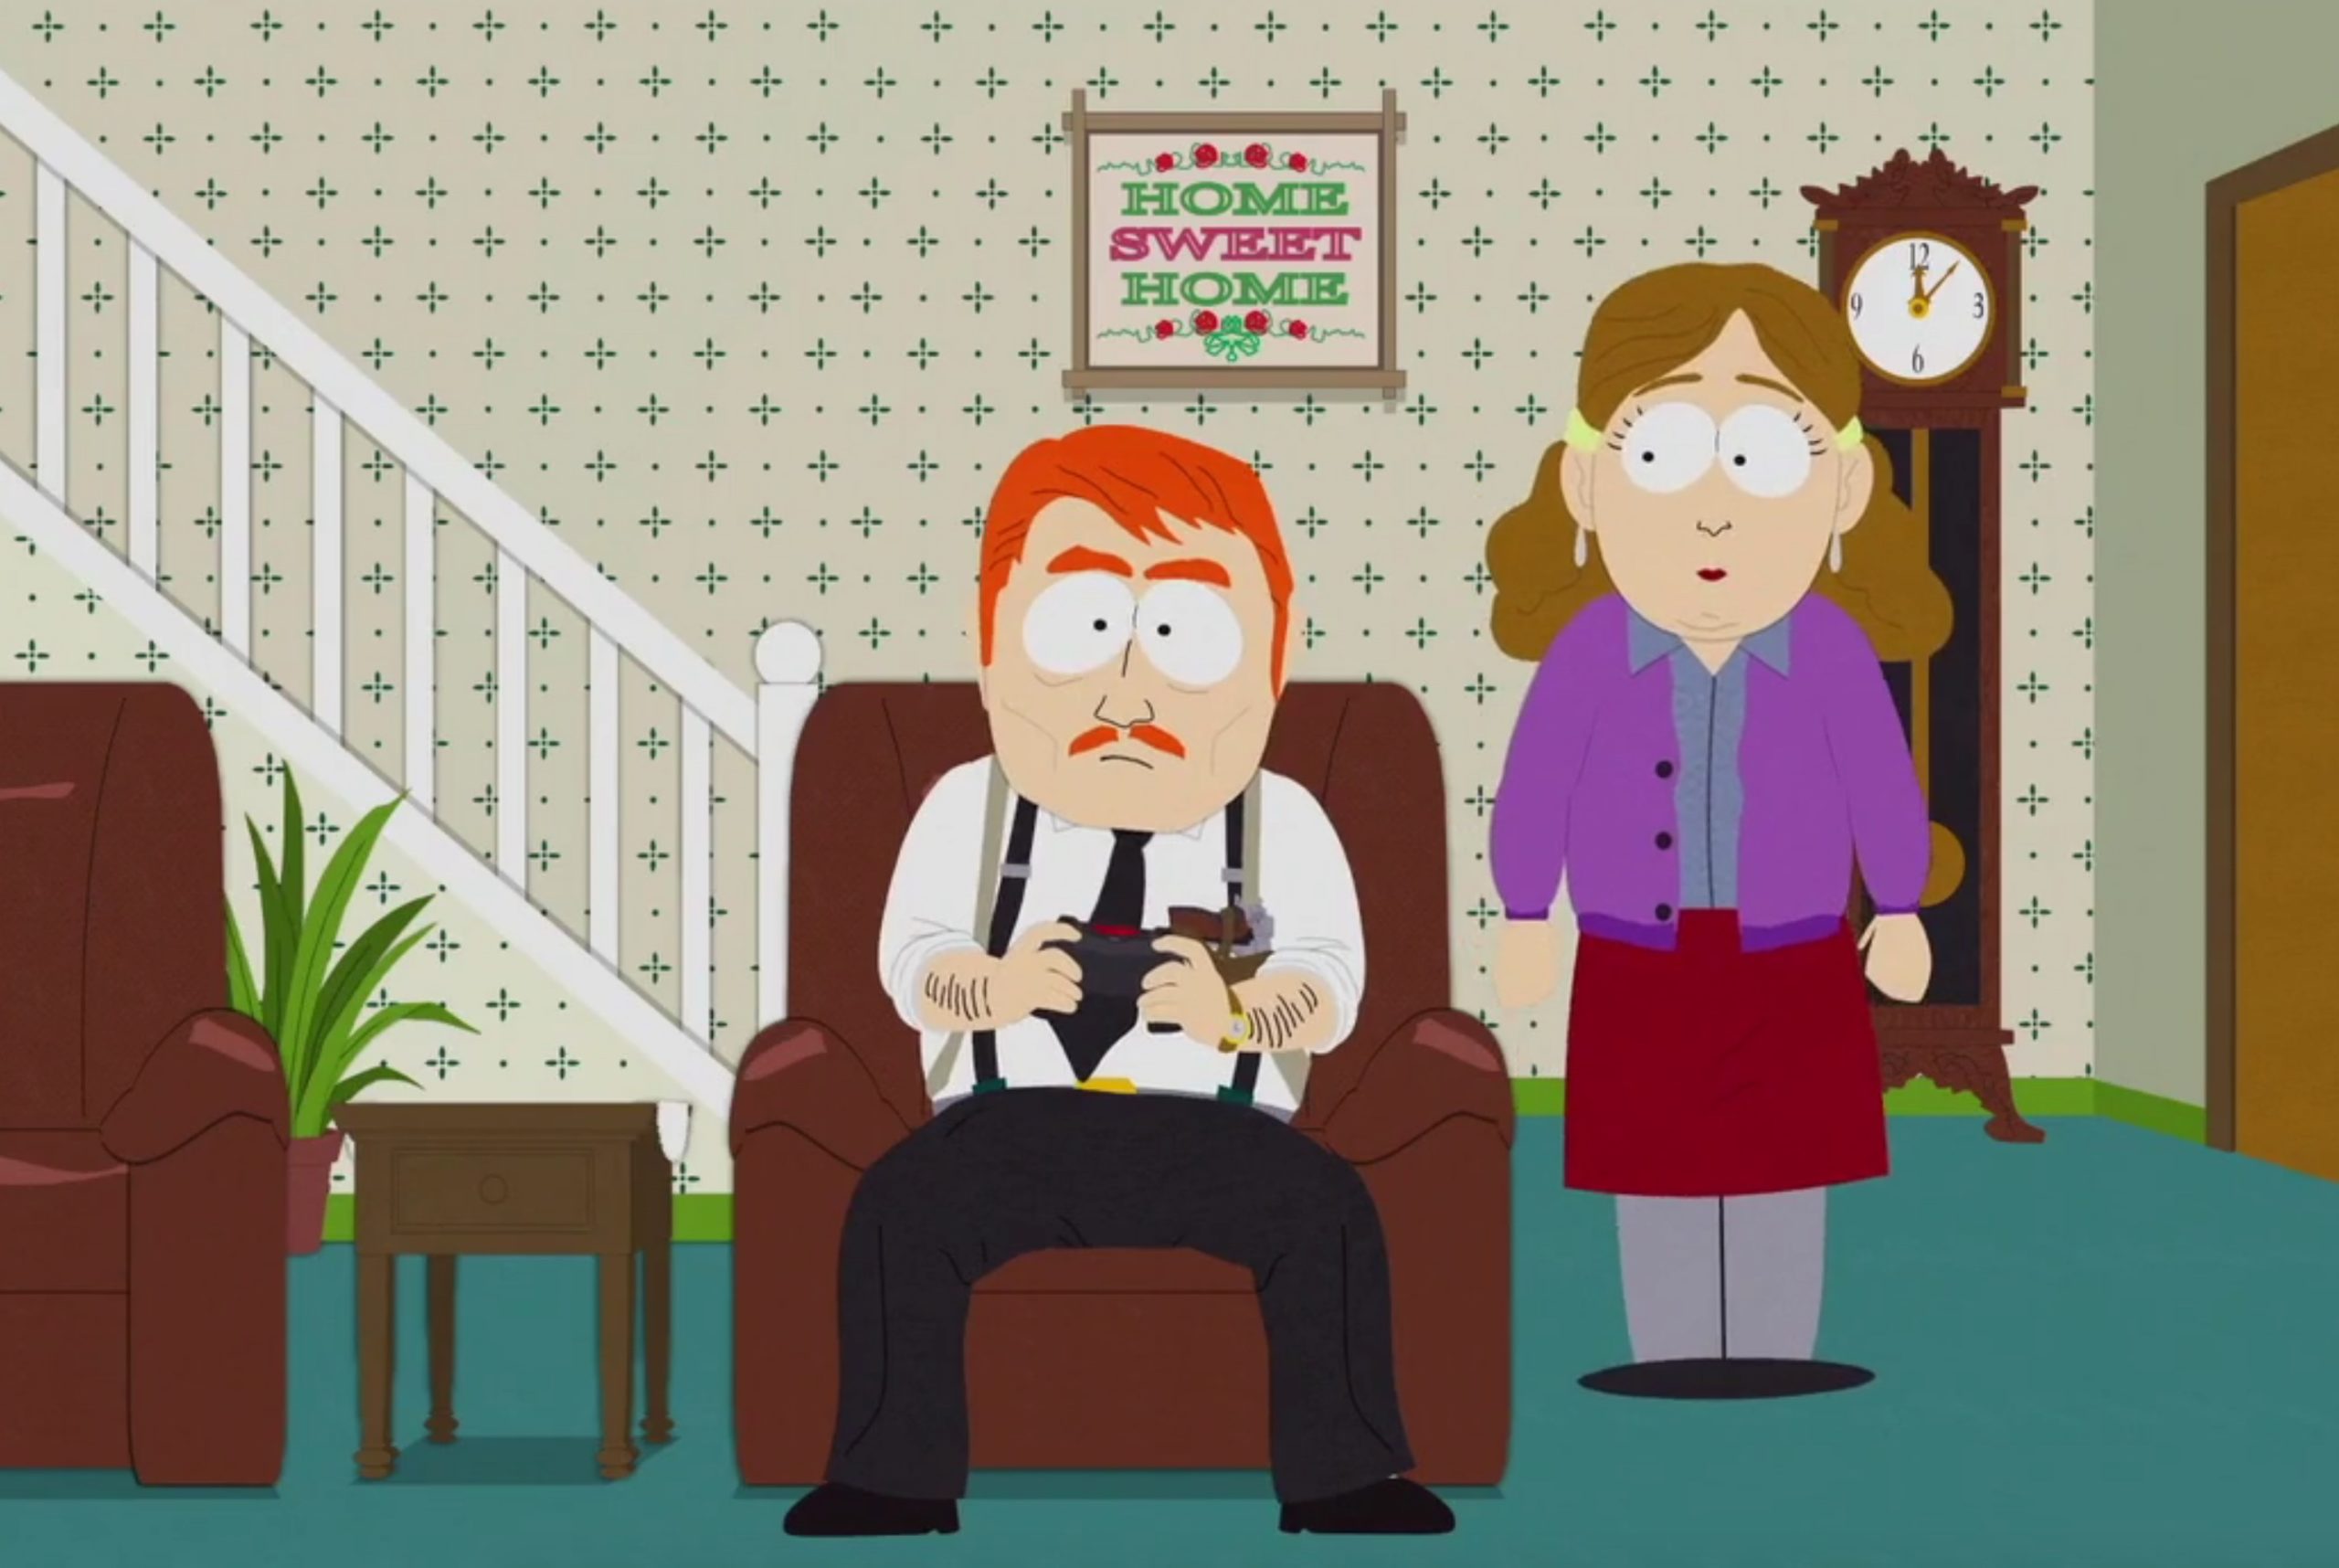 South Park Satirizes Red Dead Redemption 2 Craze In Latest Episode